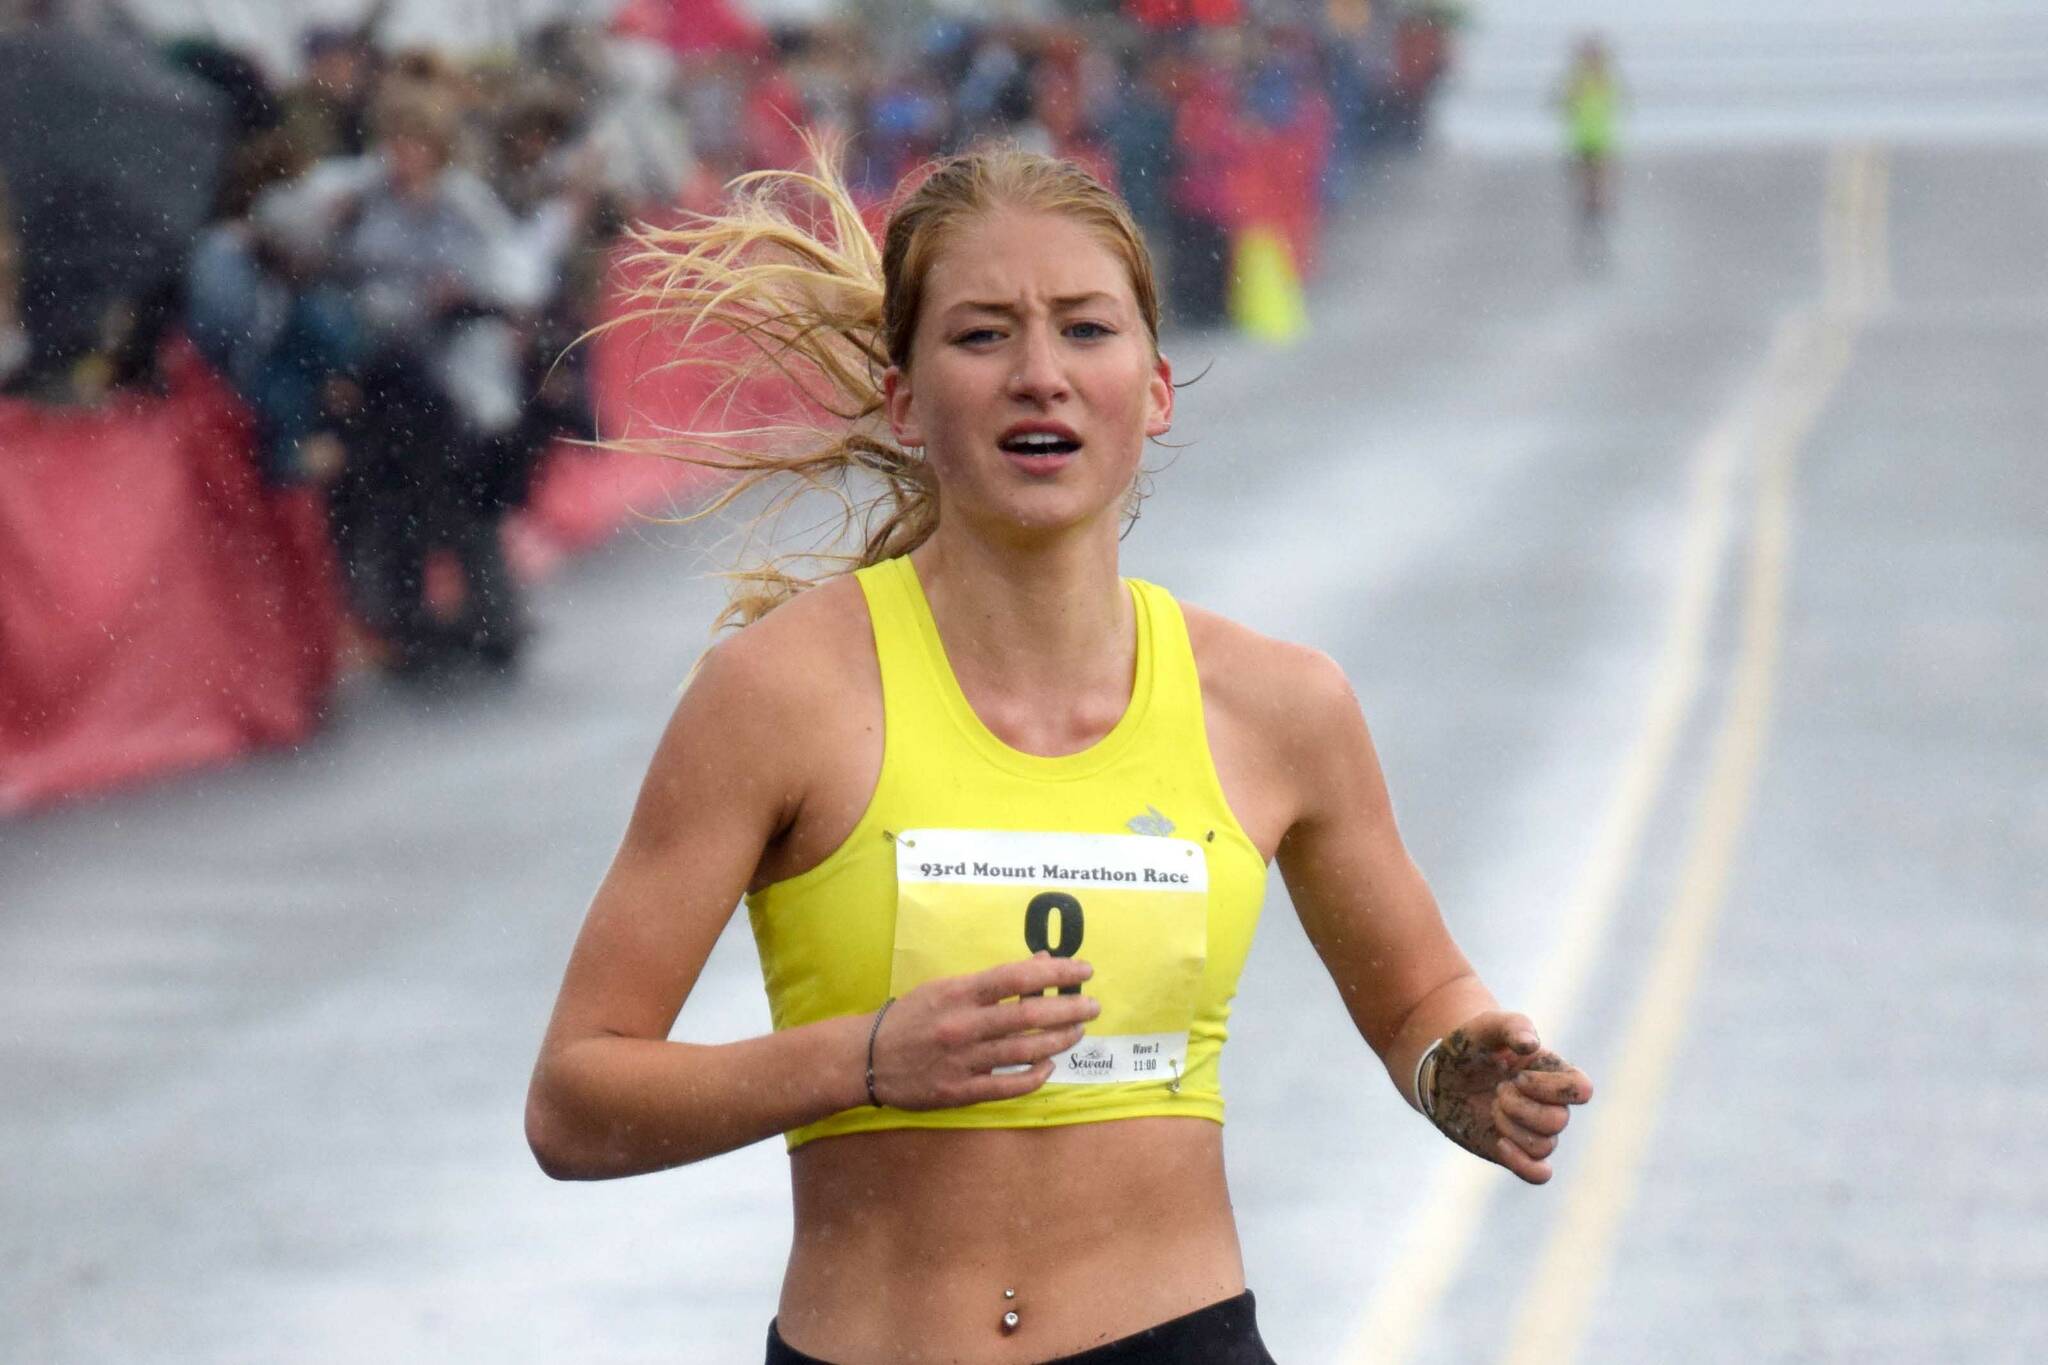 Ruby Lindquist of Seward takes second in the women's Mount Marathon Race on Wednesday, July 7, 2021, in Seward, Alaska. (Photo by Jeff Helminiak/Peninsula Clarion)